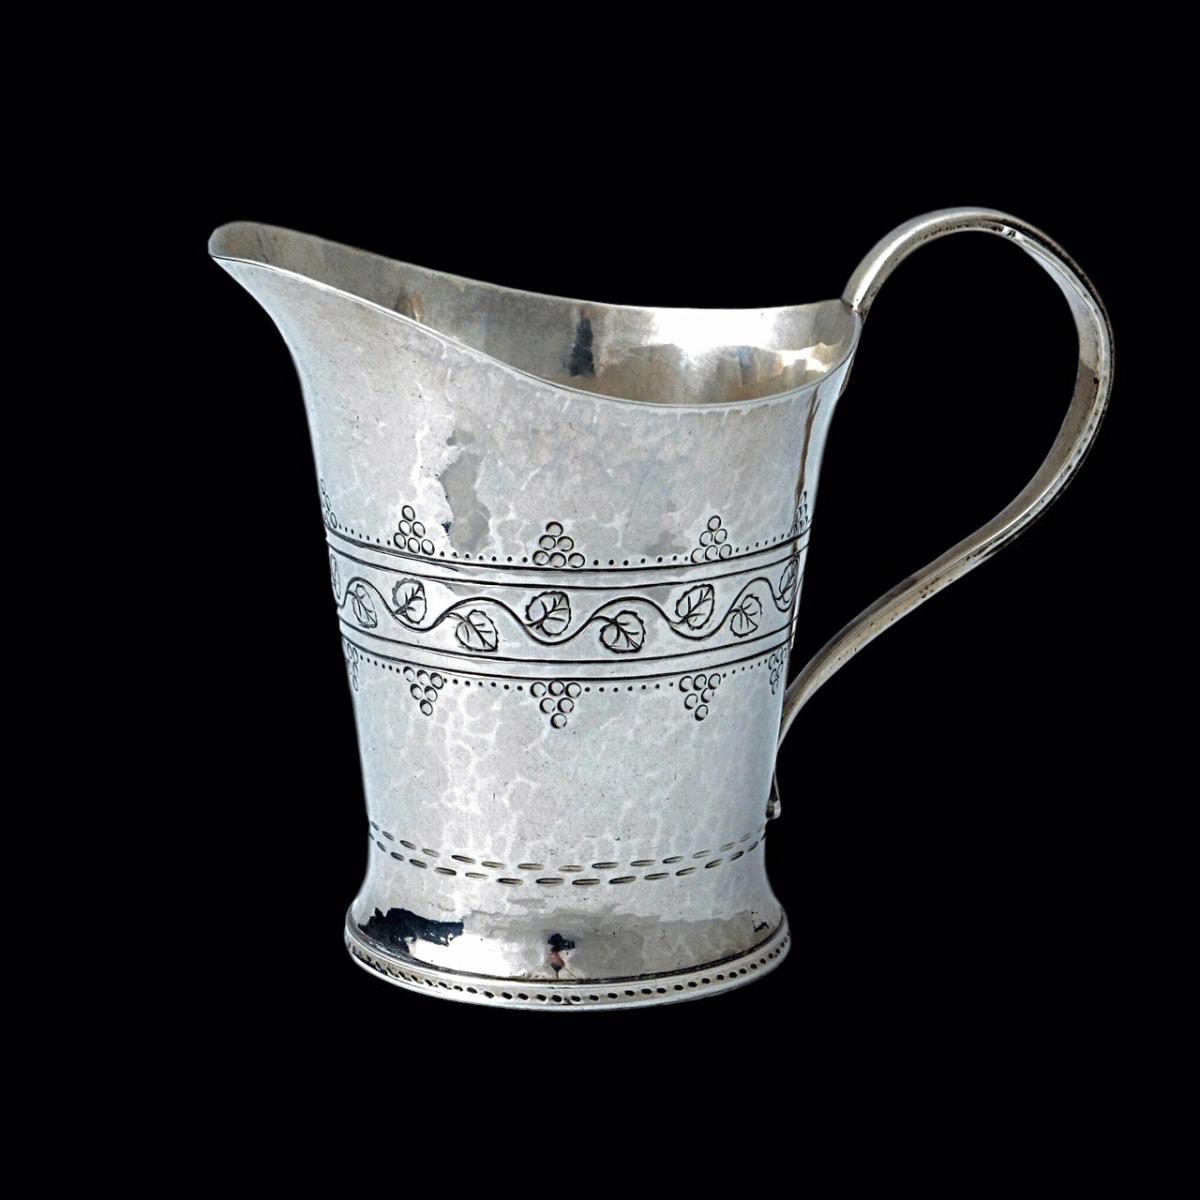 Bernard Cuzner silver jug